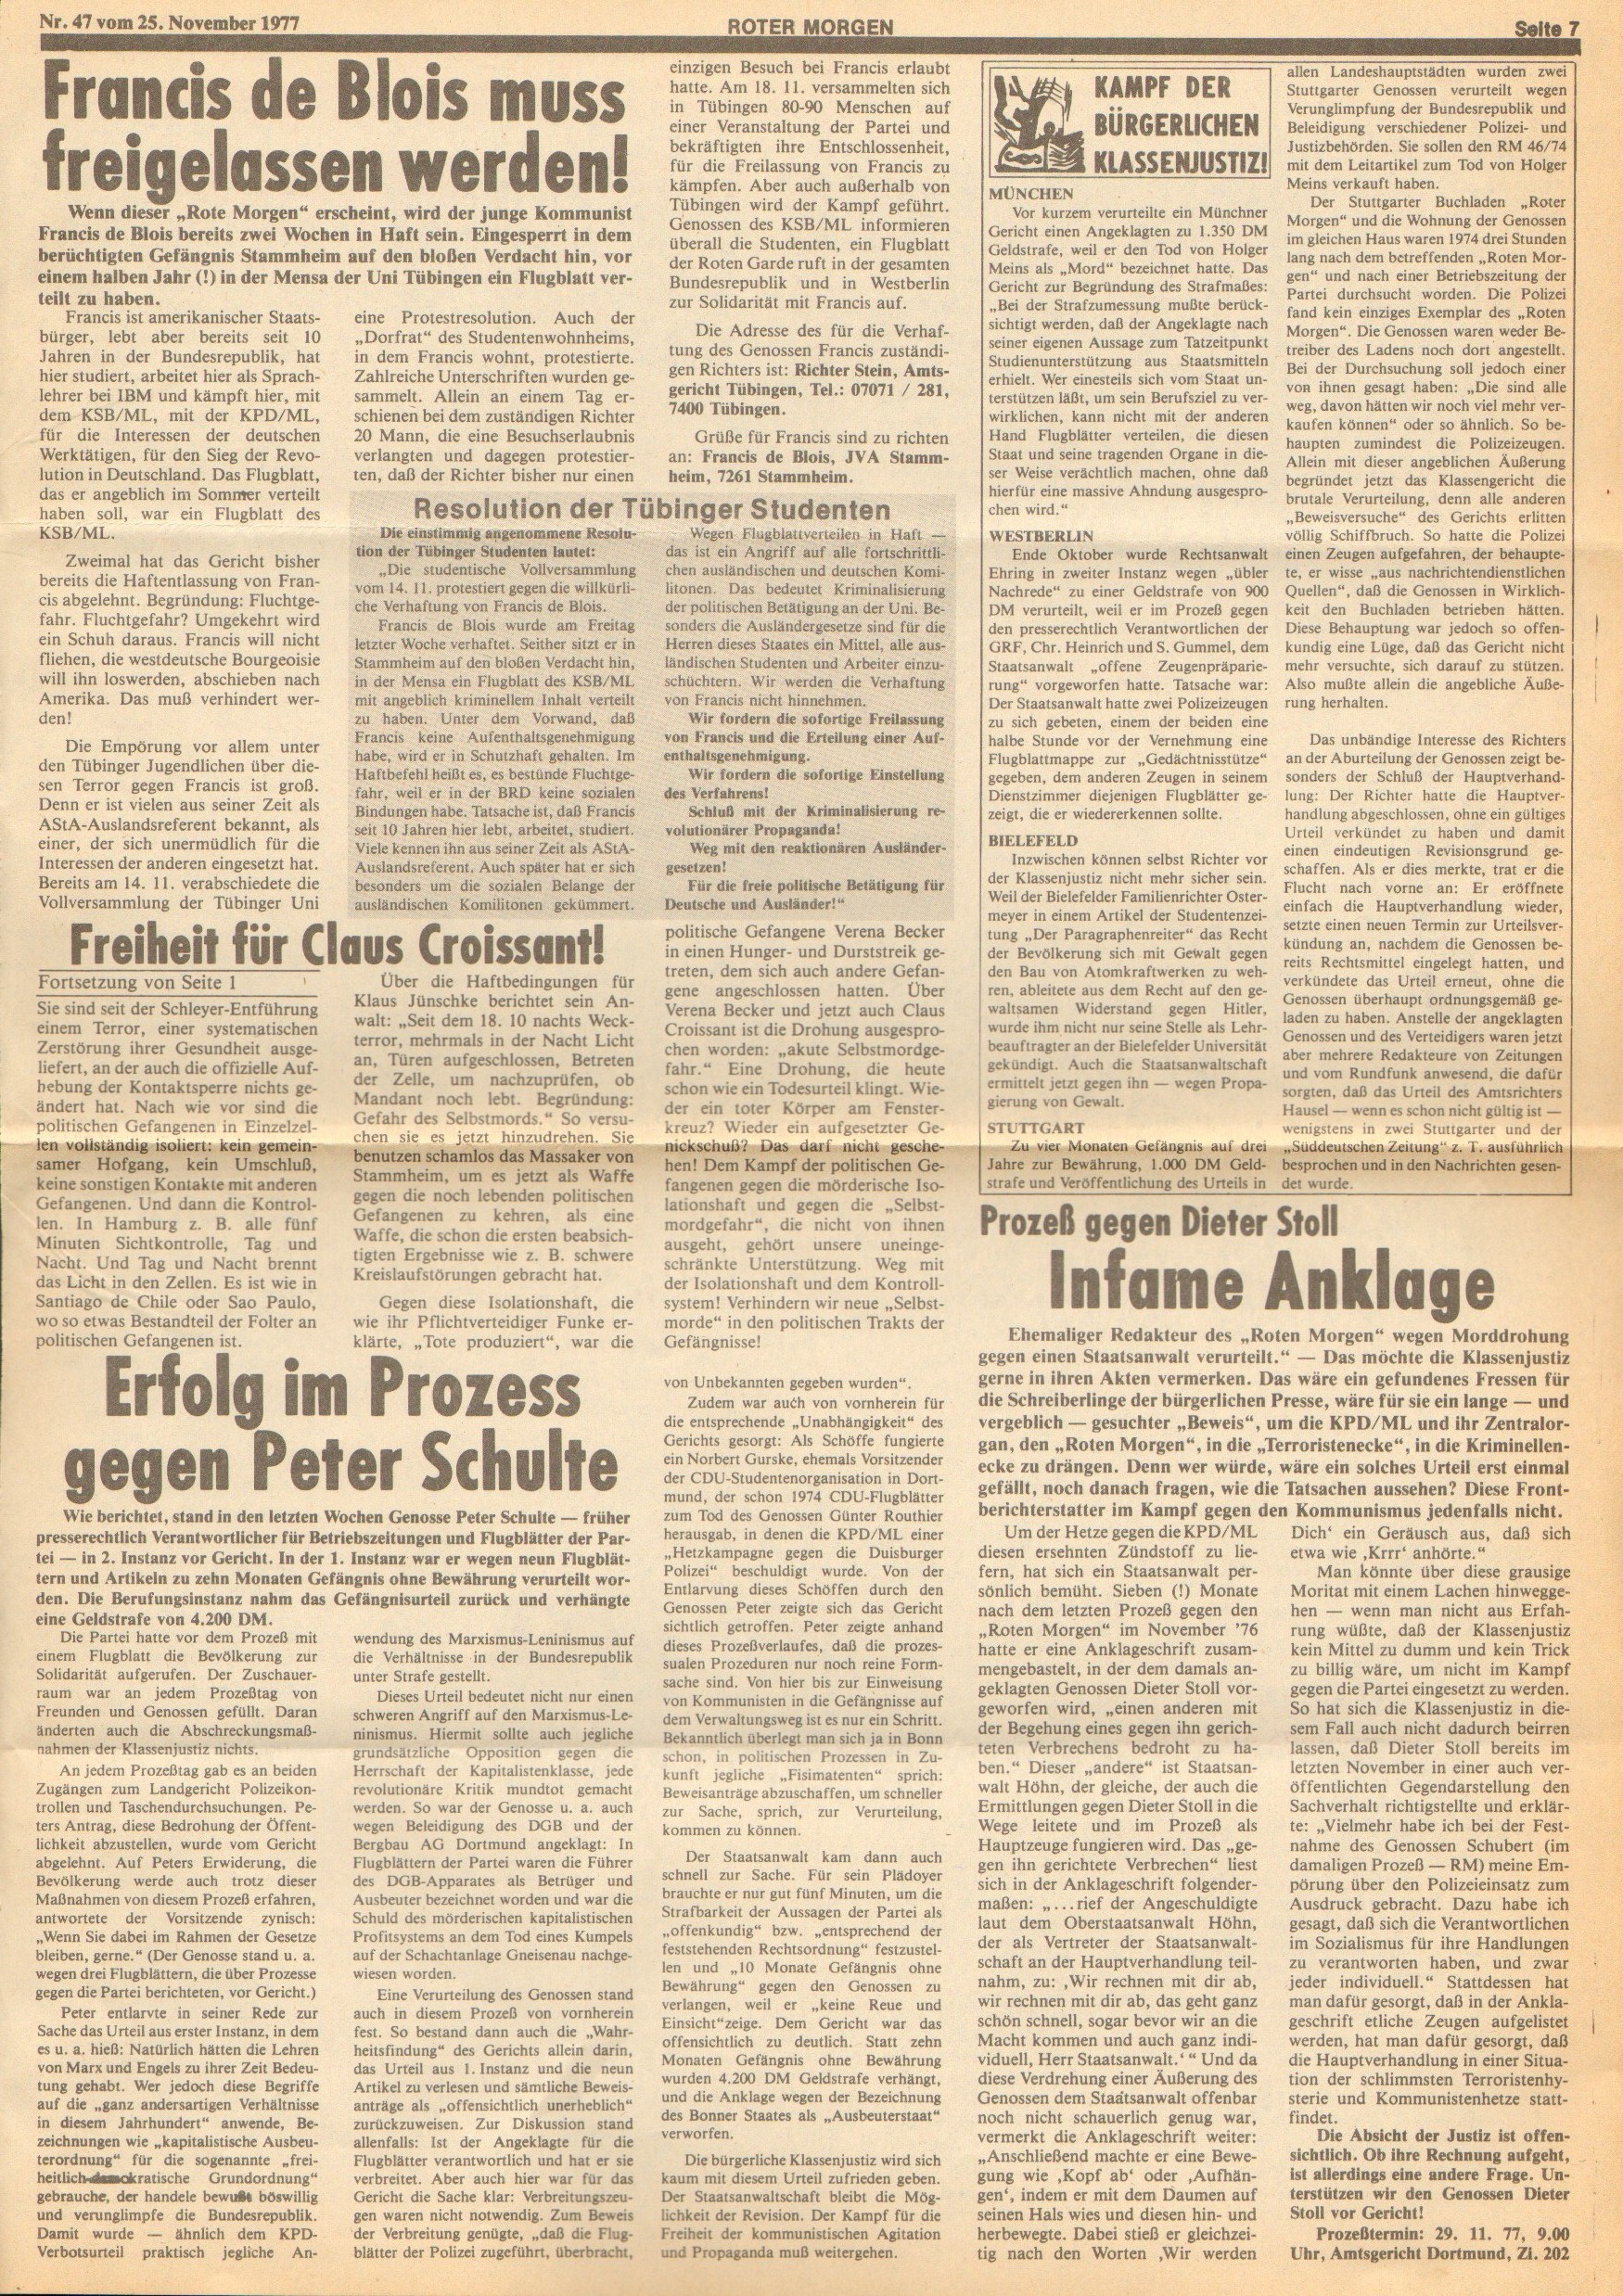 Roter Morgen, 11. Jg., 25. November 1977, Nr. 47, Seite 7